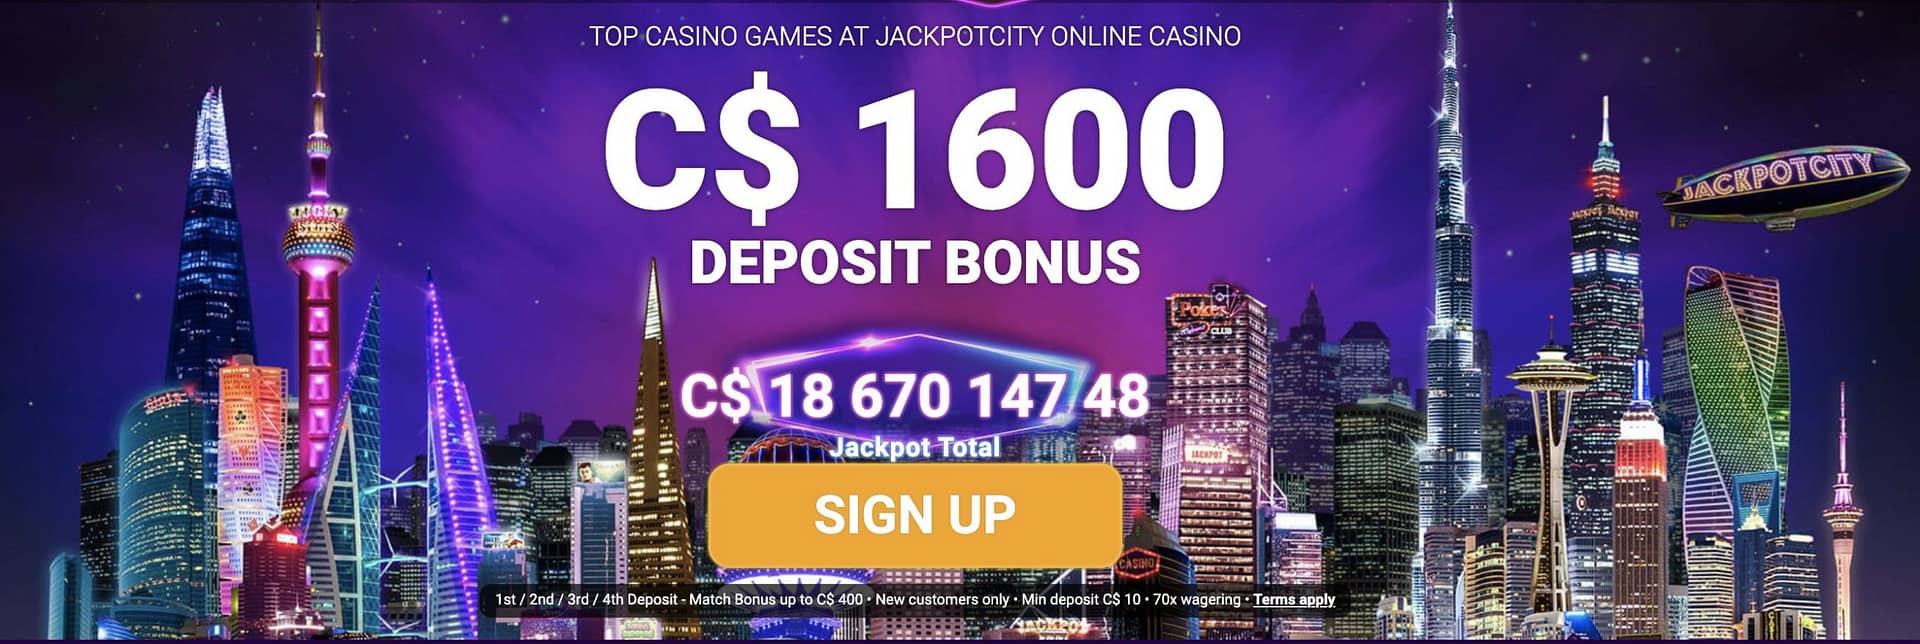 jackpotcity-online-casino-review